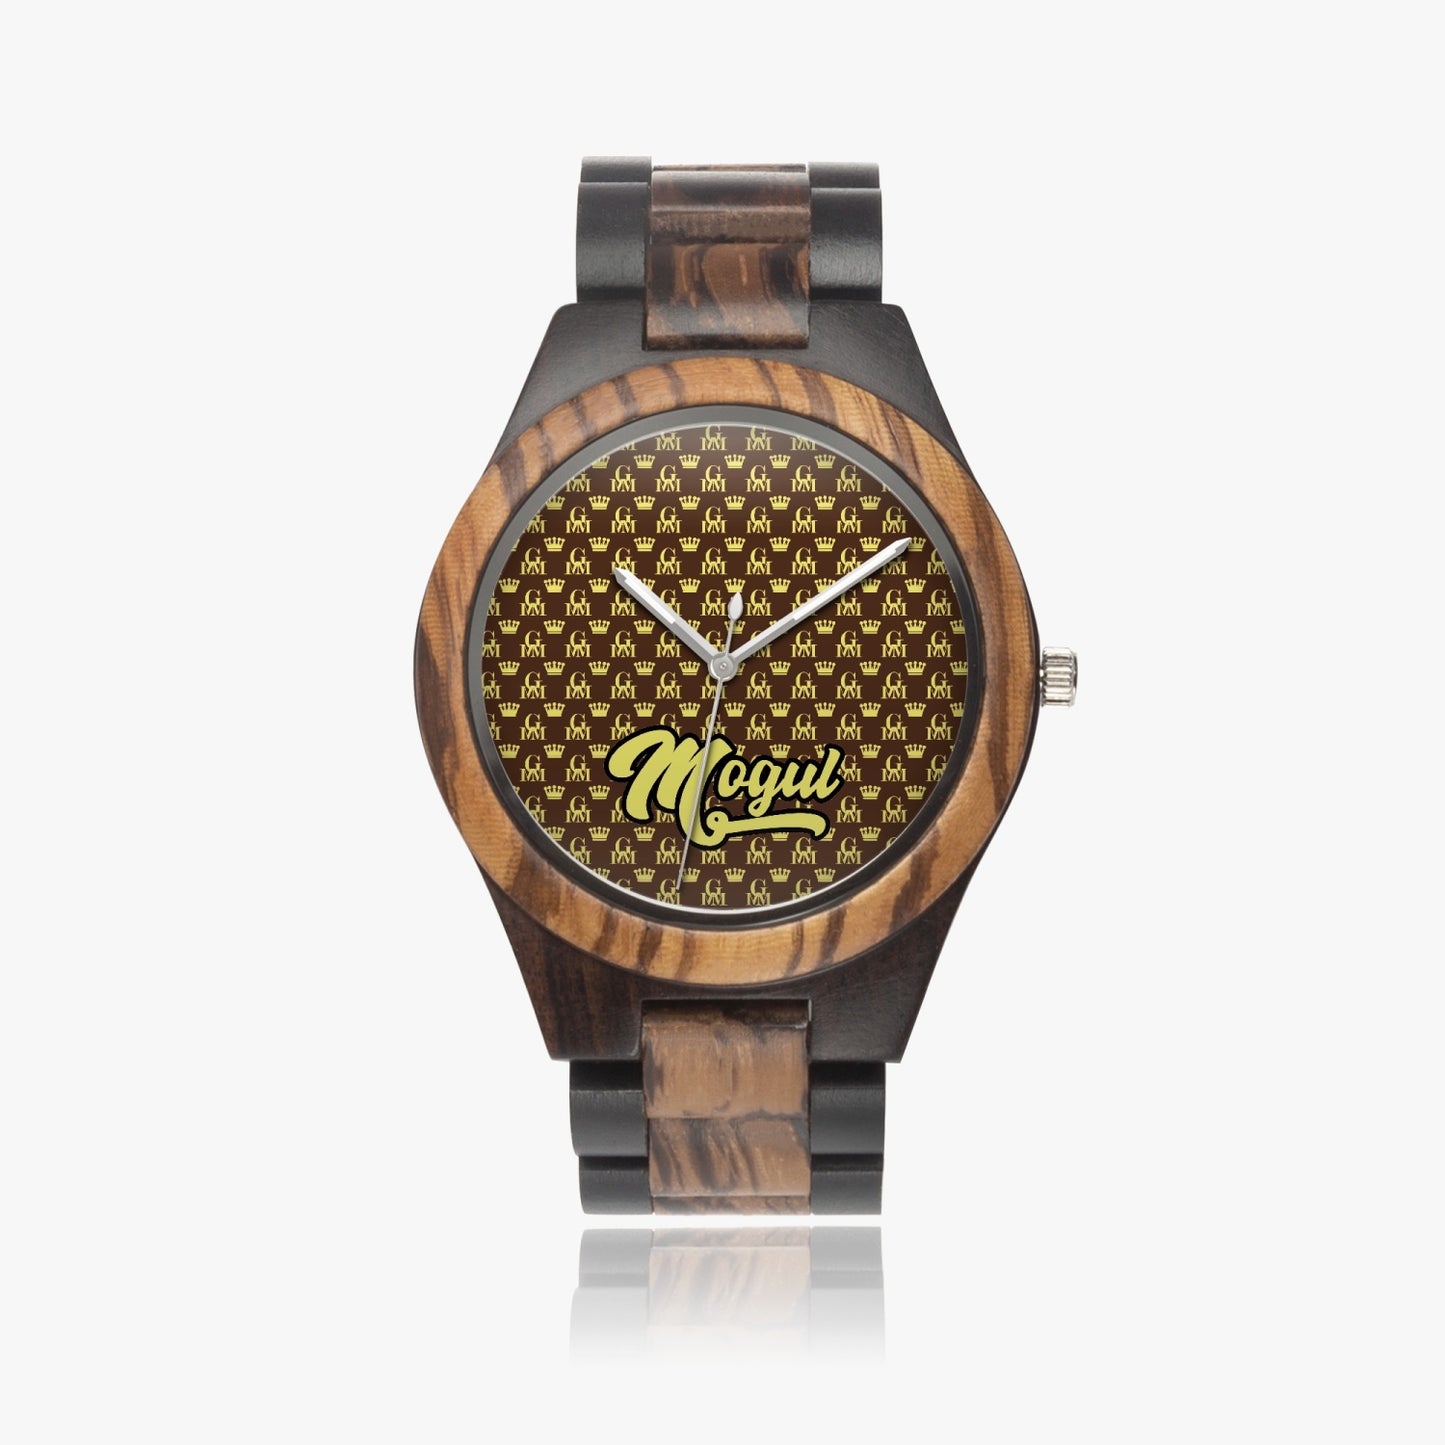 MOGUL Imported Indian Ebony Wood Watch - Exclusive 45mm